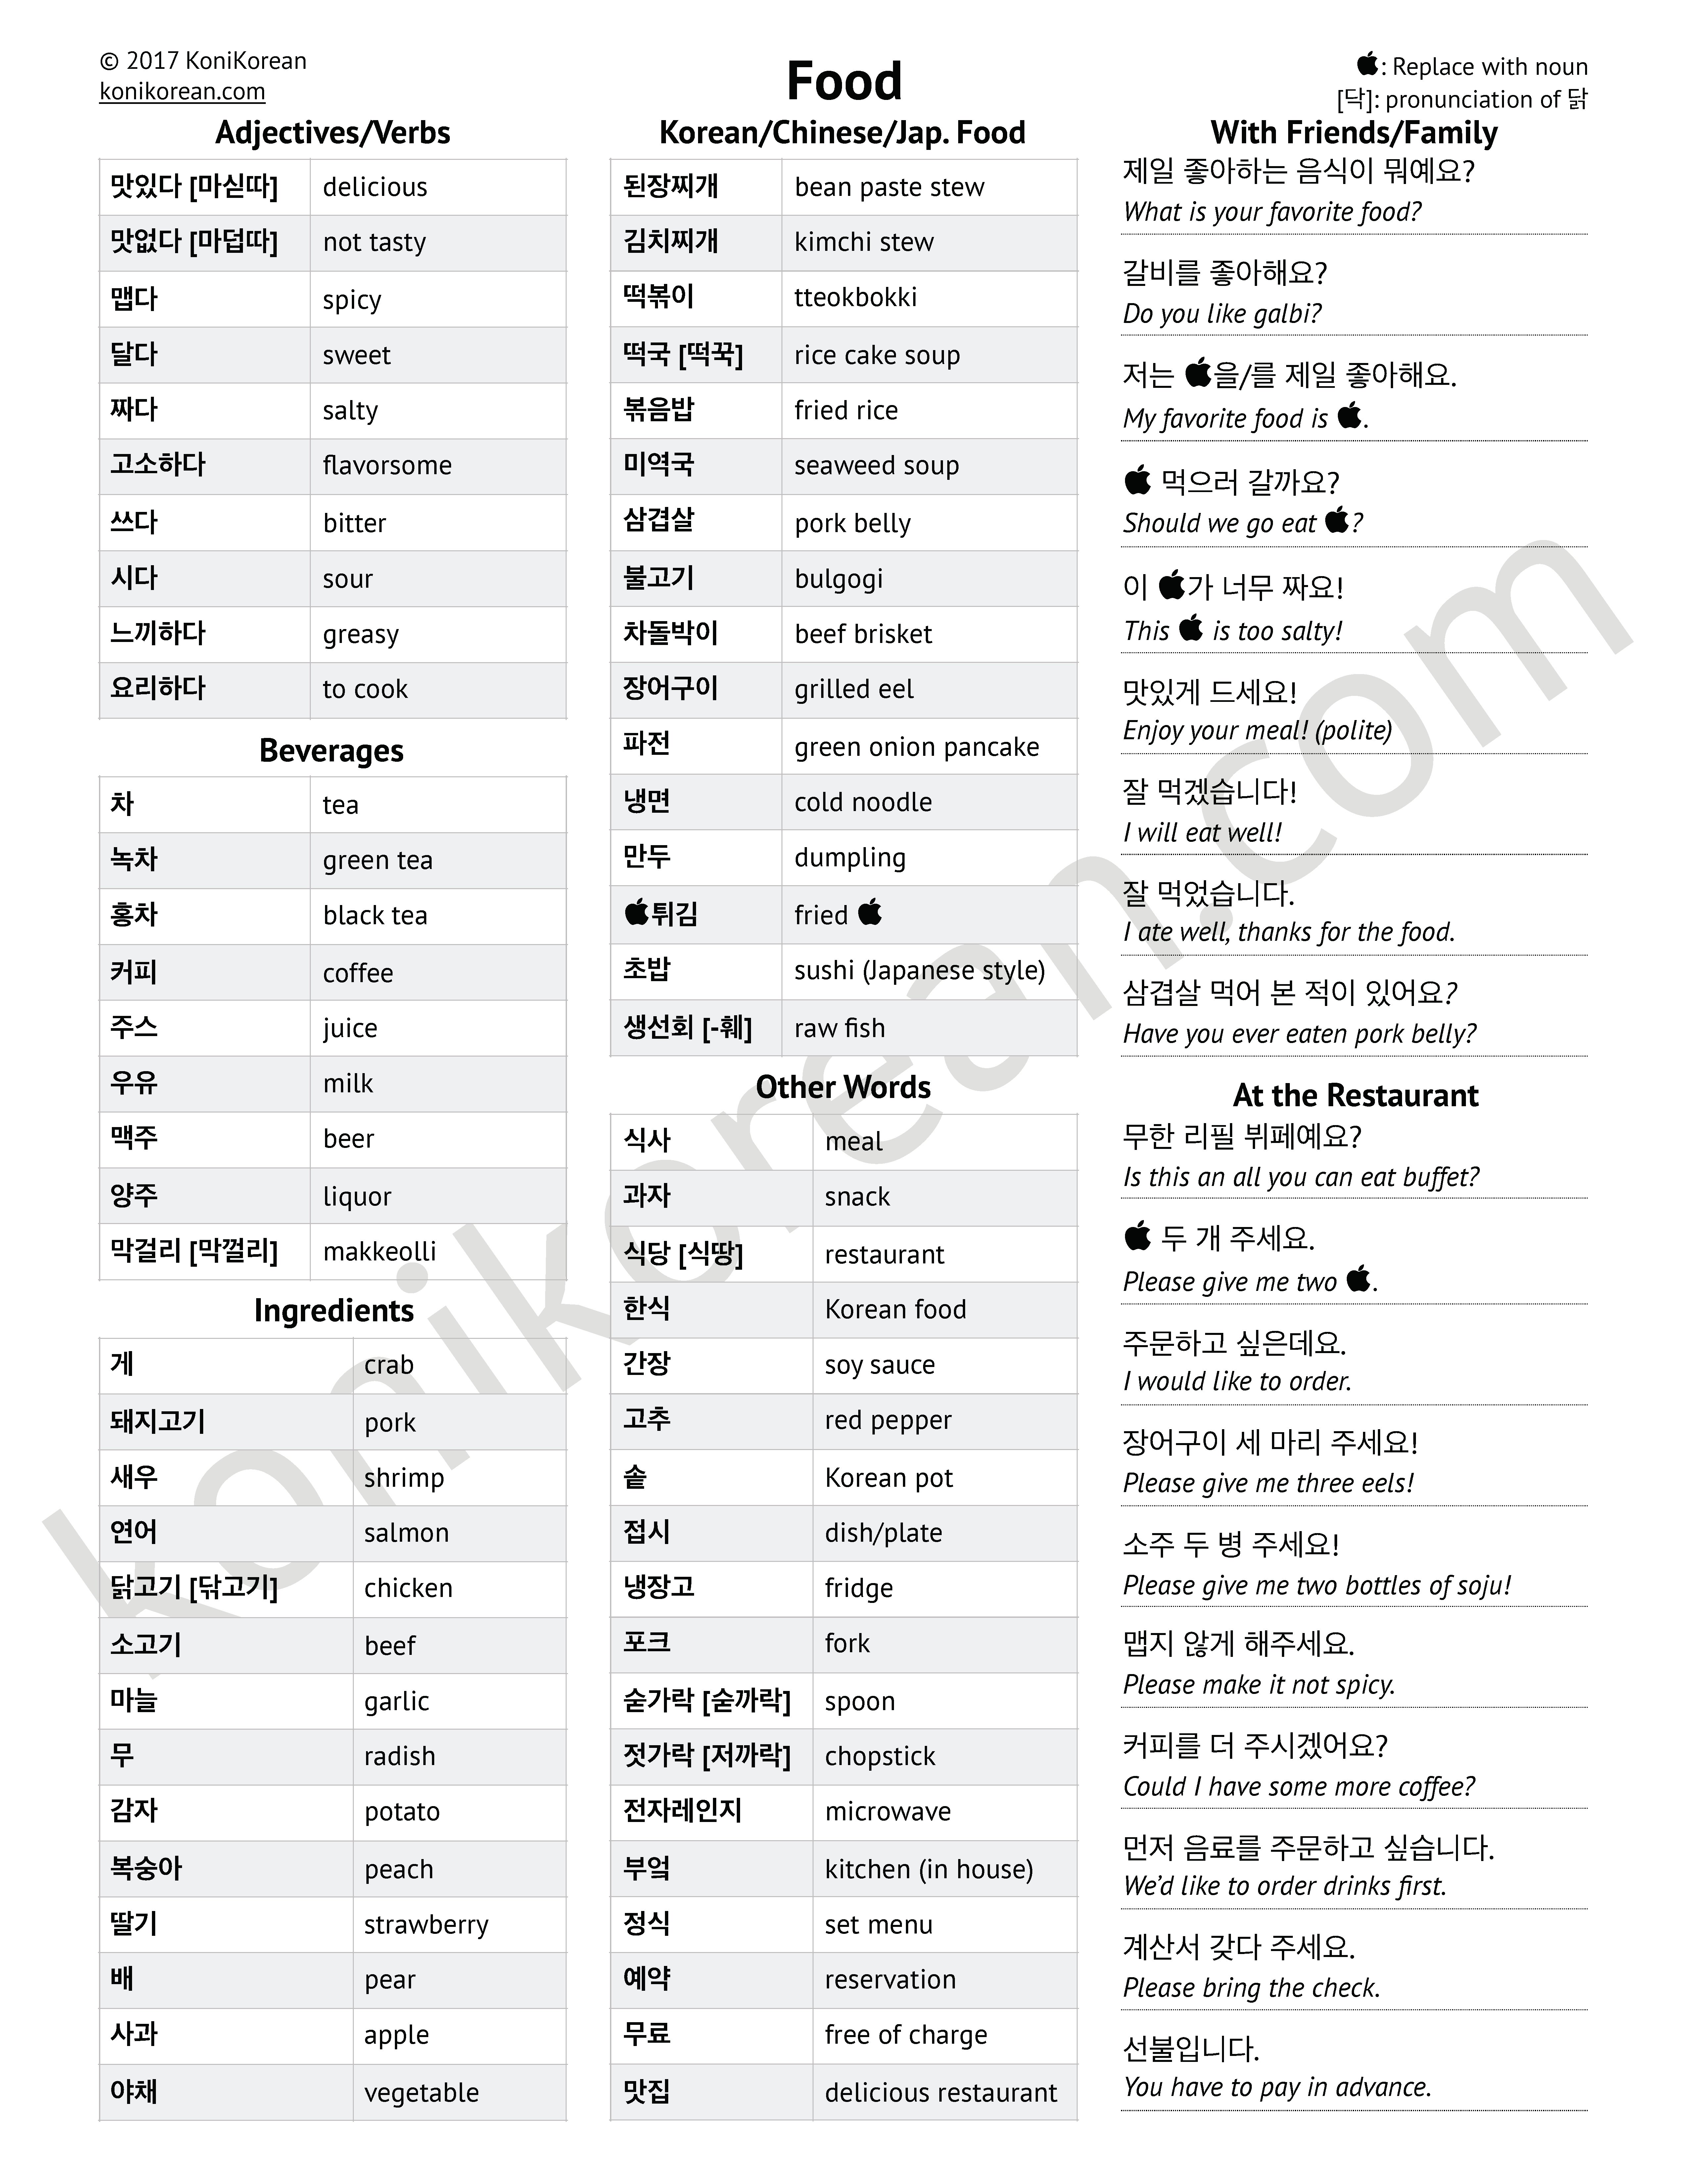 Food-related Korean vocabulary and sentences.